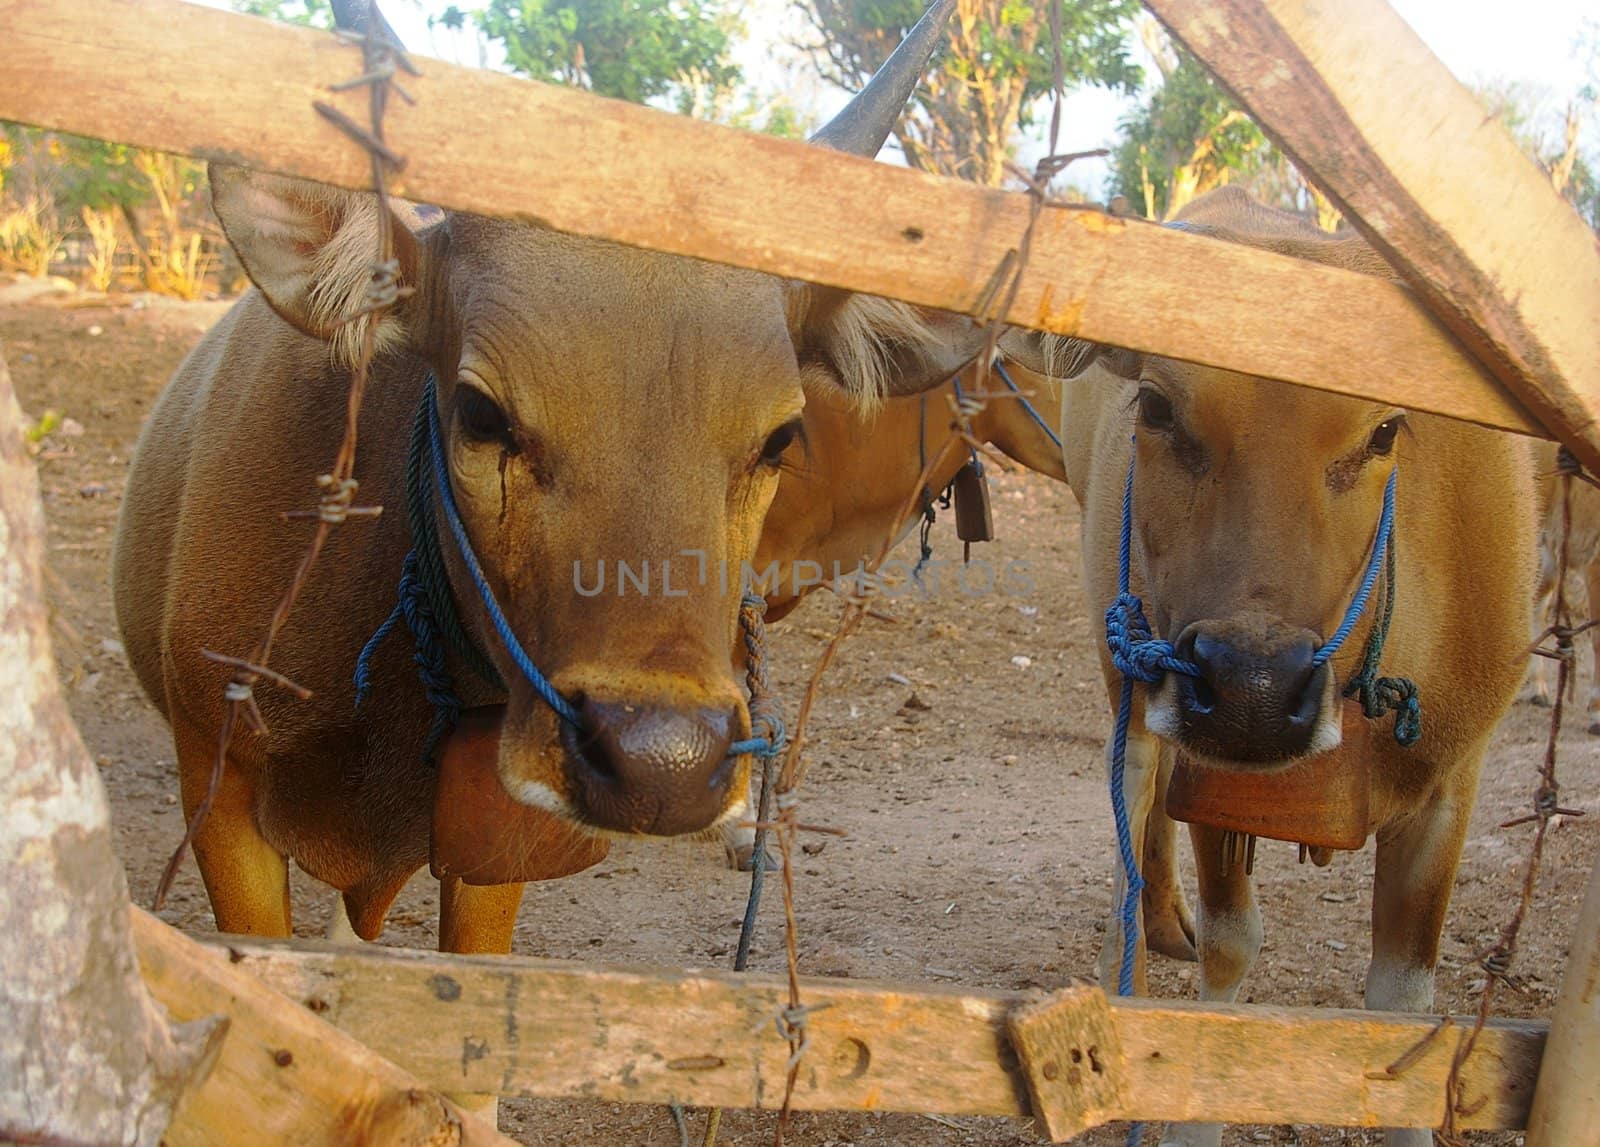 Cows peering through a fence on a farm in Nusa Dua, Bali, Indonesia.